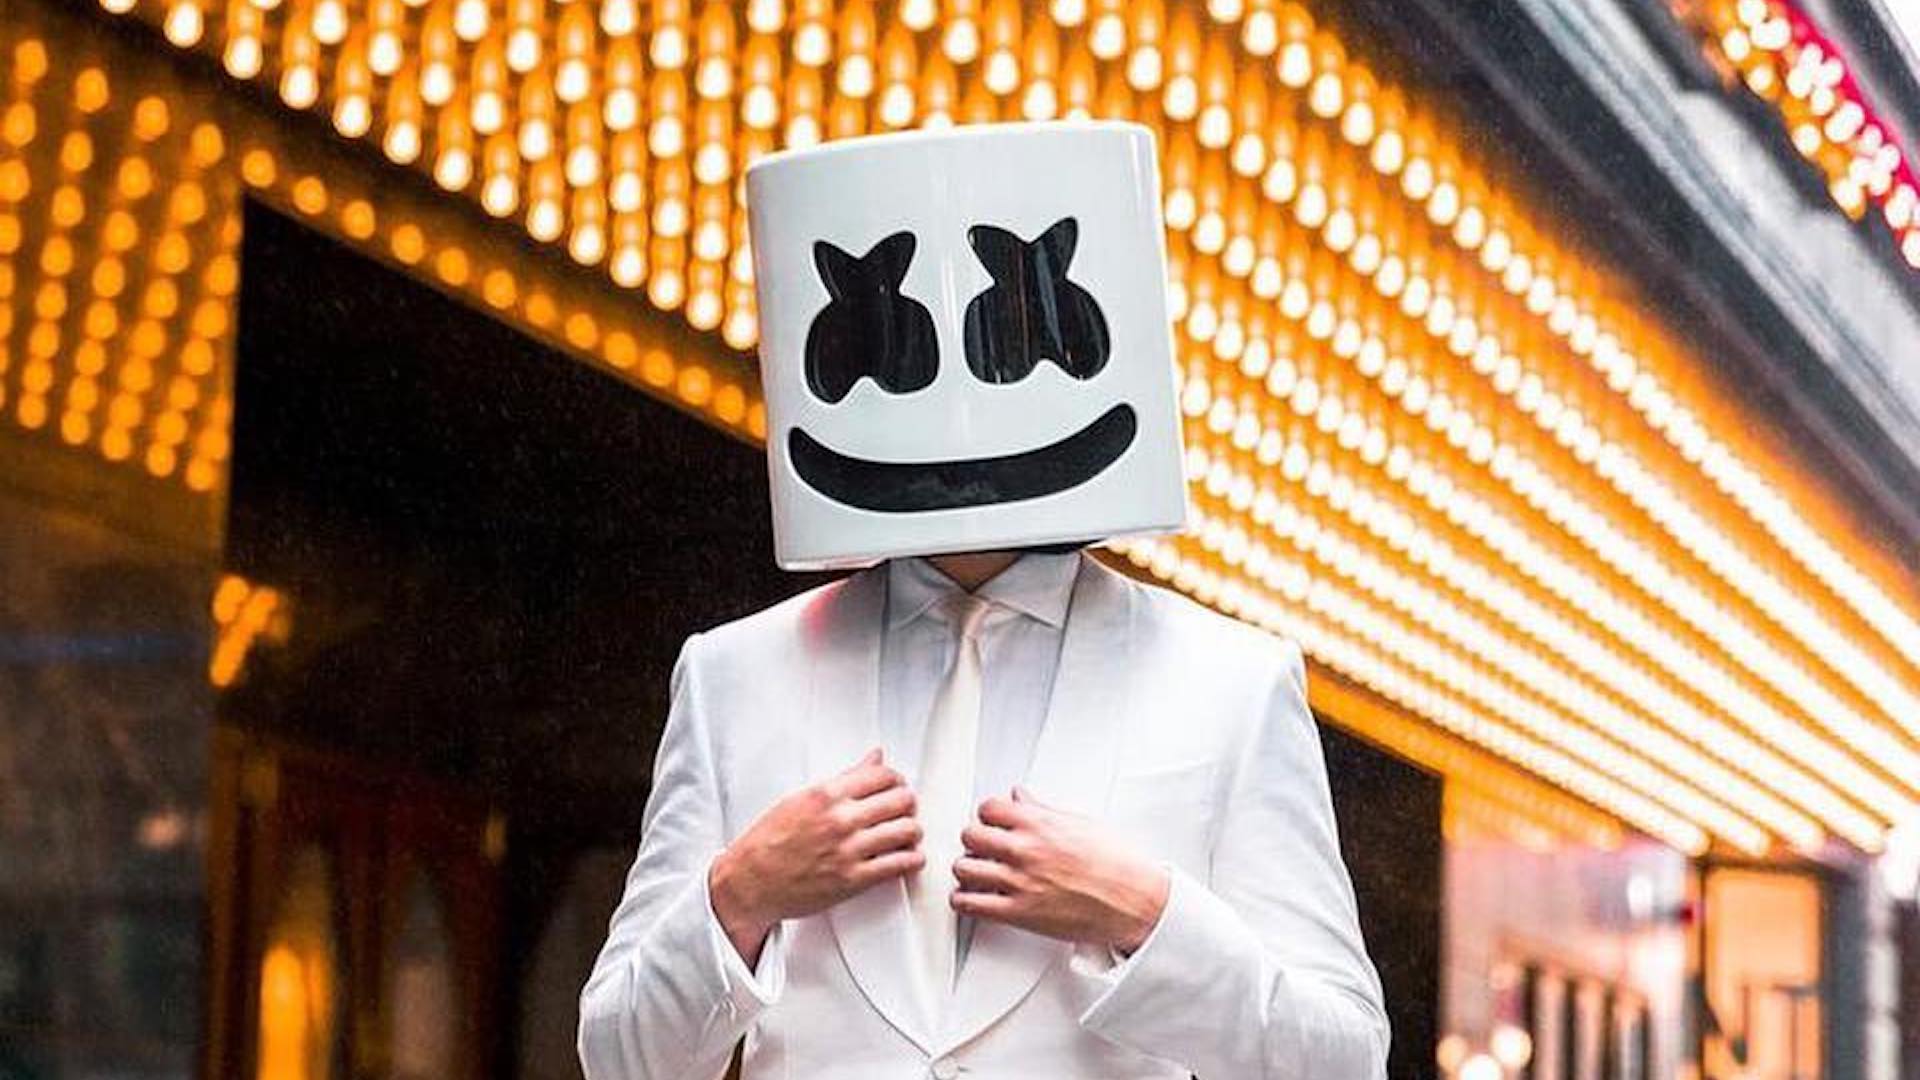 DJ Marshmello in a crisp white suit against lots of lights